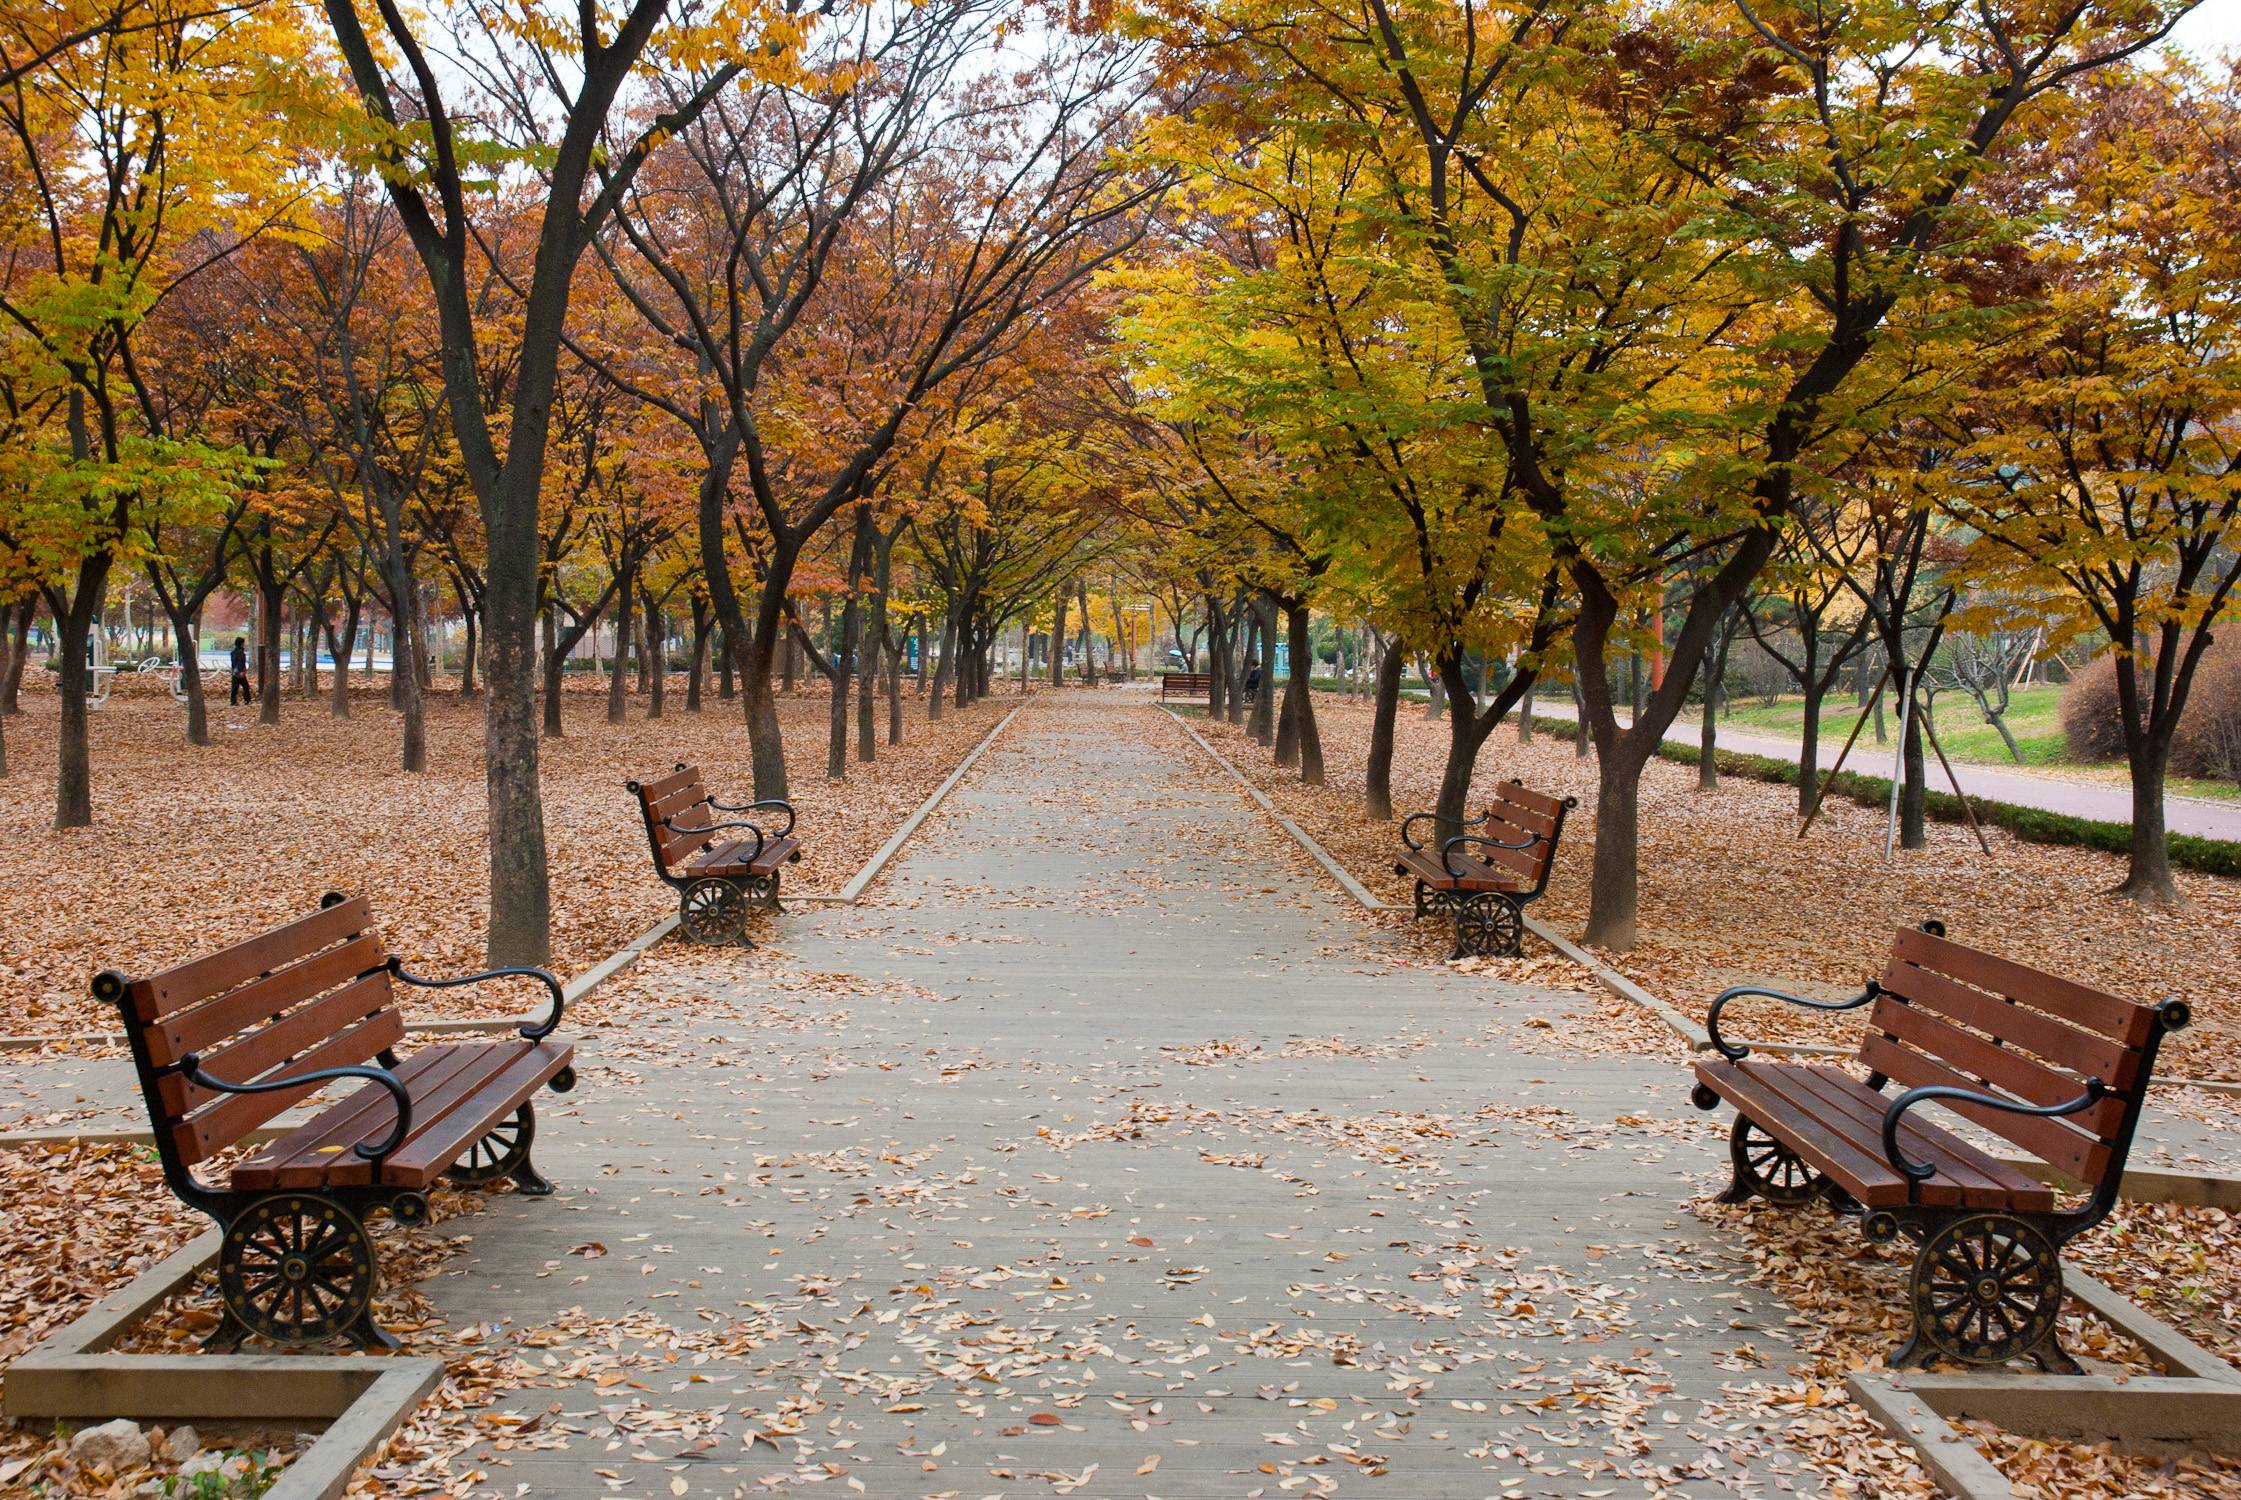 [HanCinema Korea's Diary] Park Culture in Korea @ HanCinema :: The